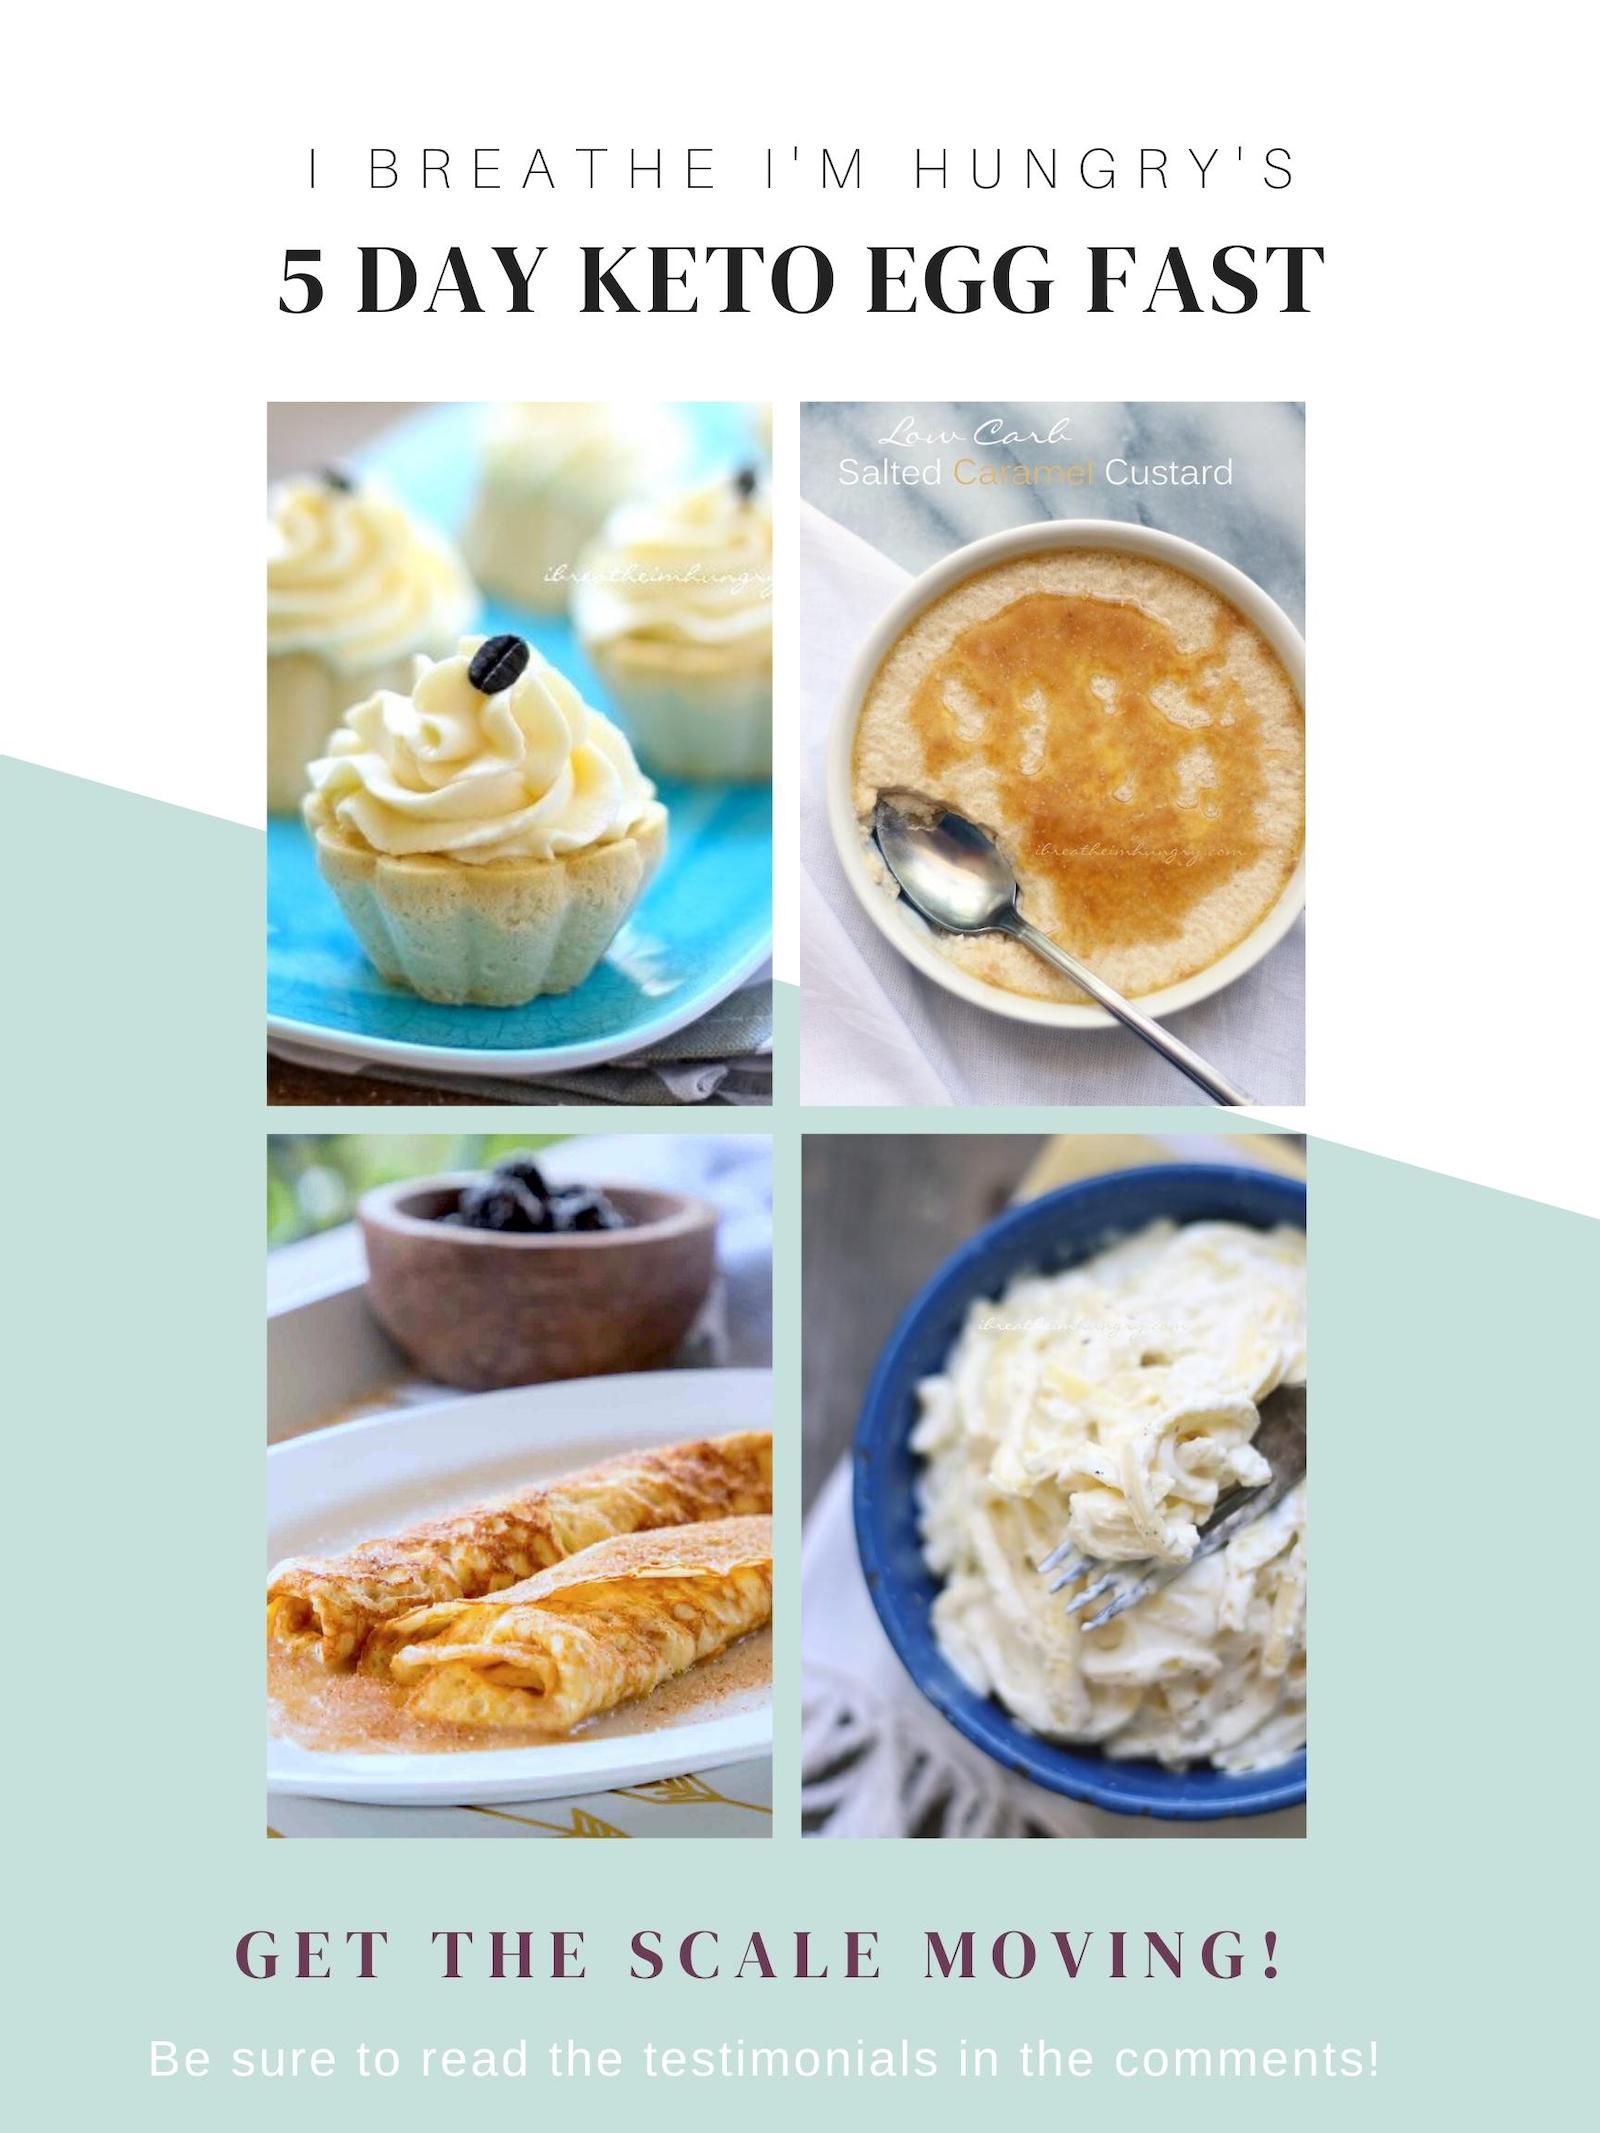 The Best 5 Day Keto Egg Fast Menu Plan!